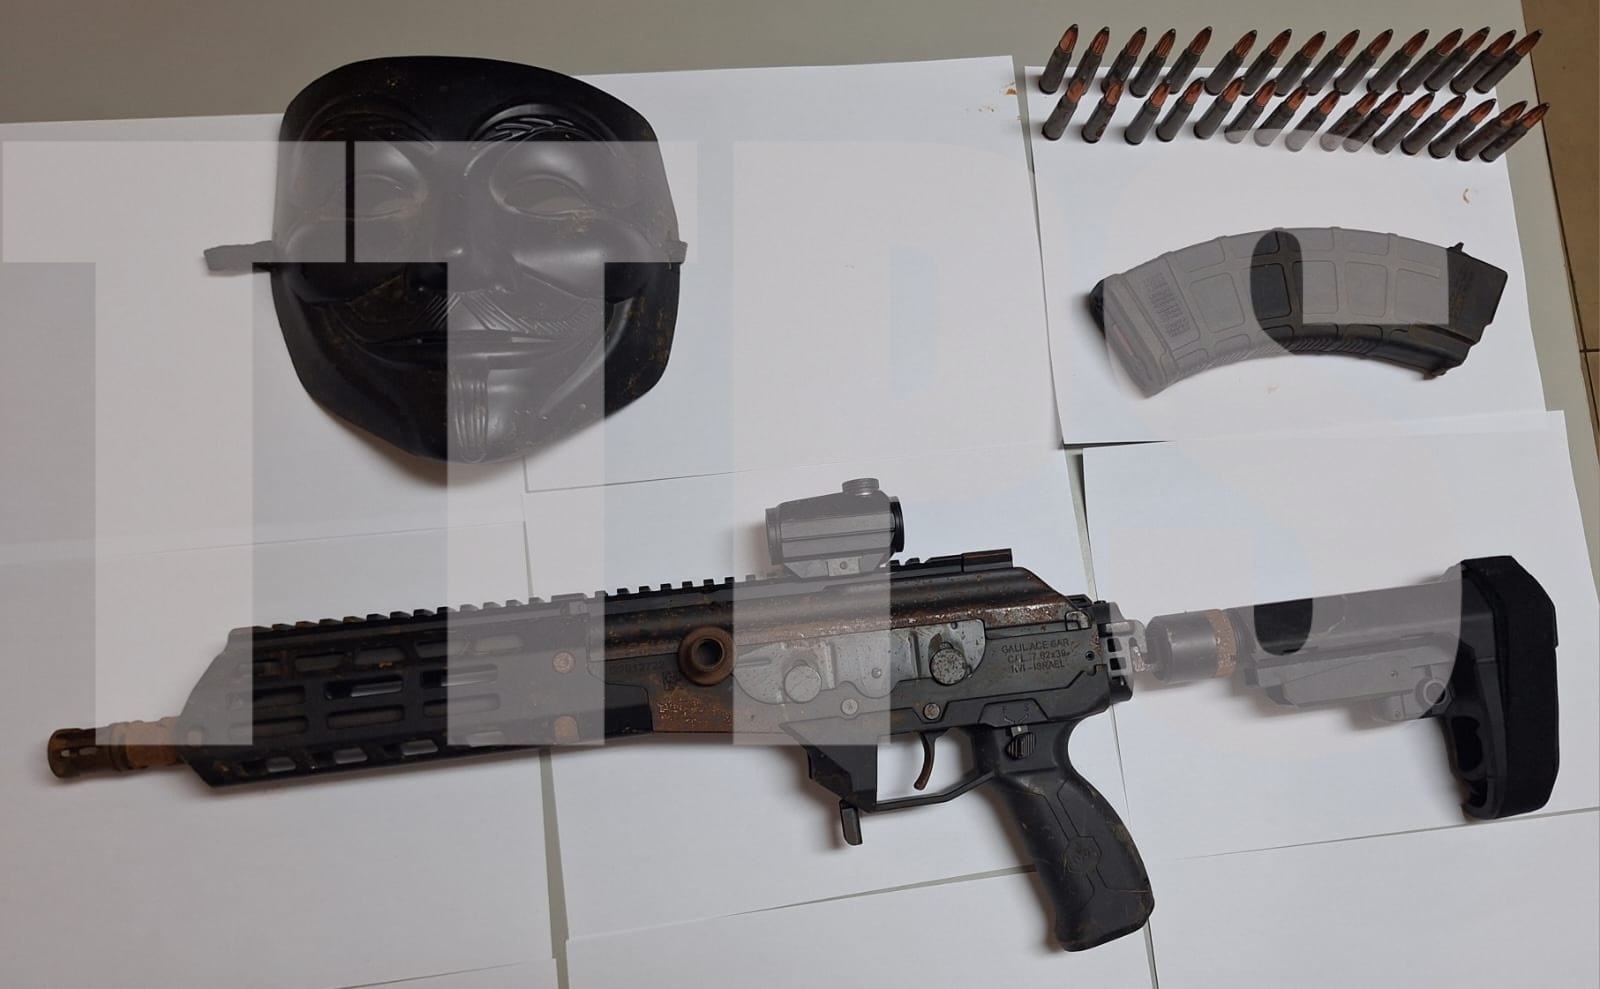 Rifle and quantity of ammo seized in Santa Cruz